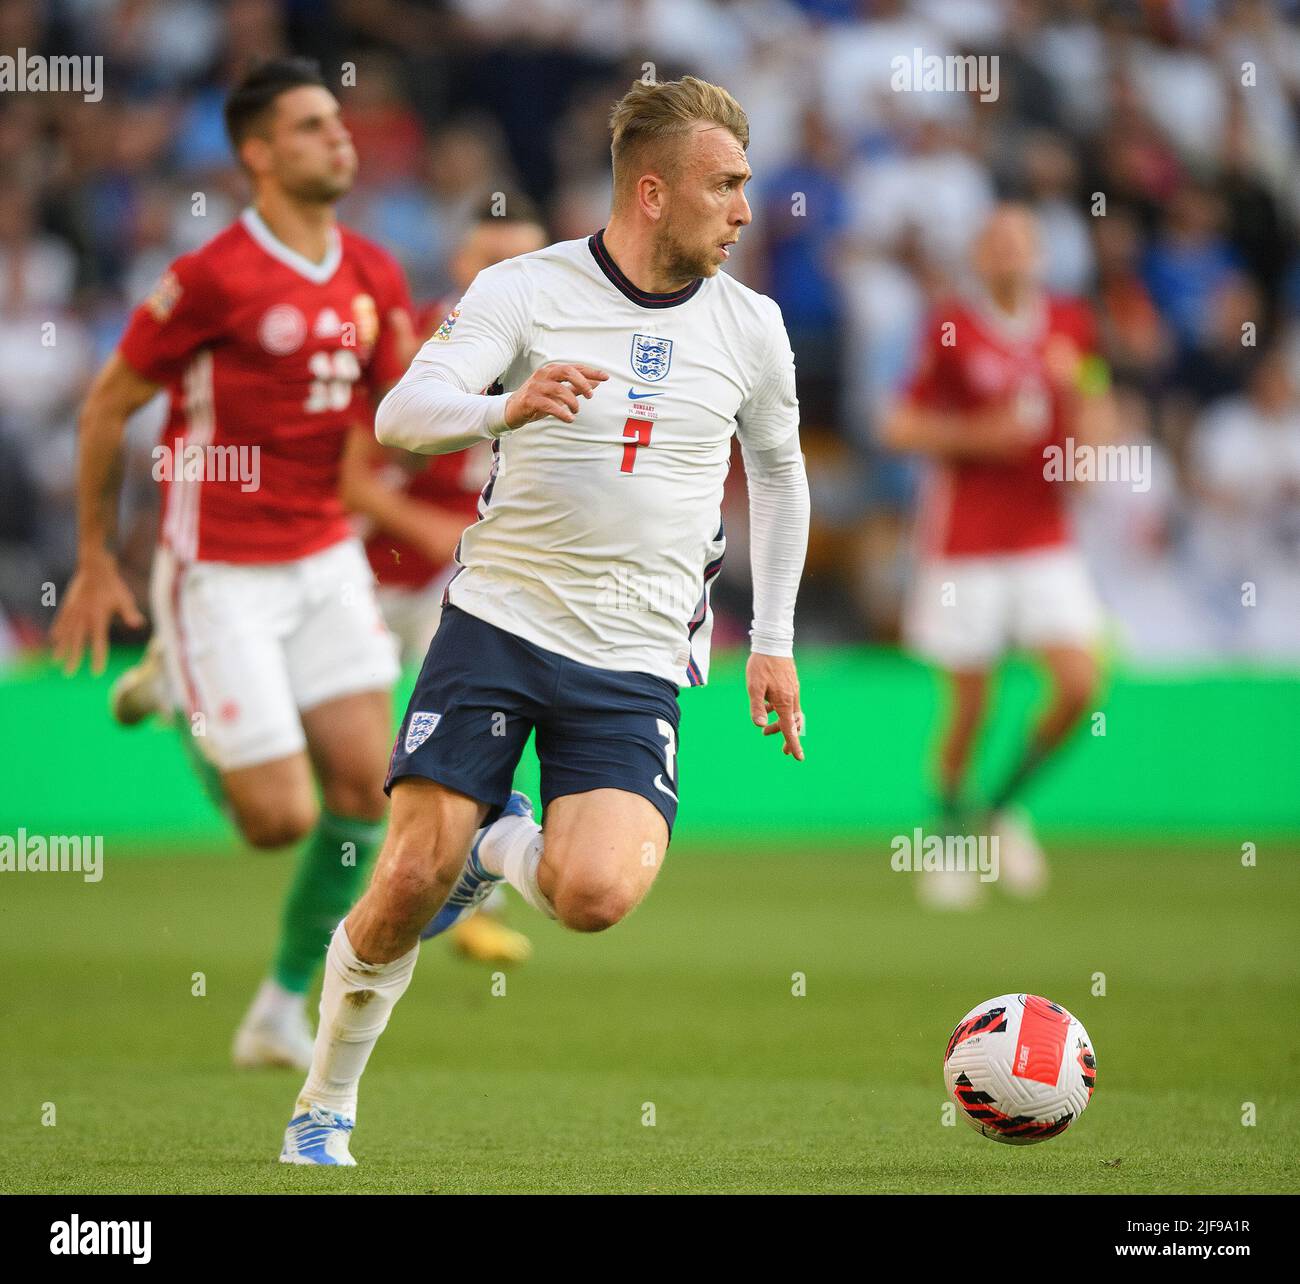 England – Ungarn – UEFA Nations League. 14/6/22. Jarrod Bowen während des Nations League-Spiels gegen Ungarn. Pic : Mark Pain / Alamy Stockfoto